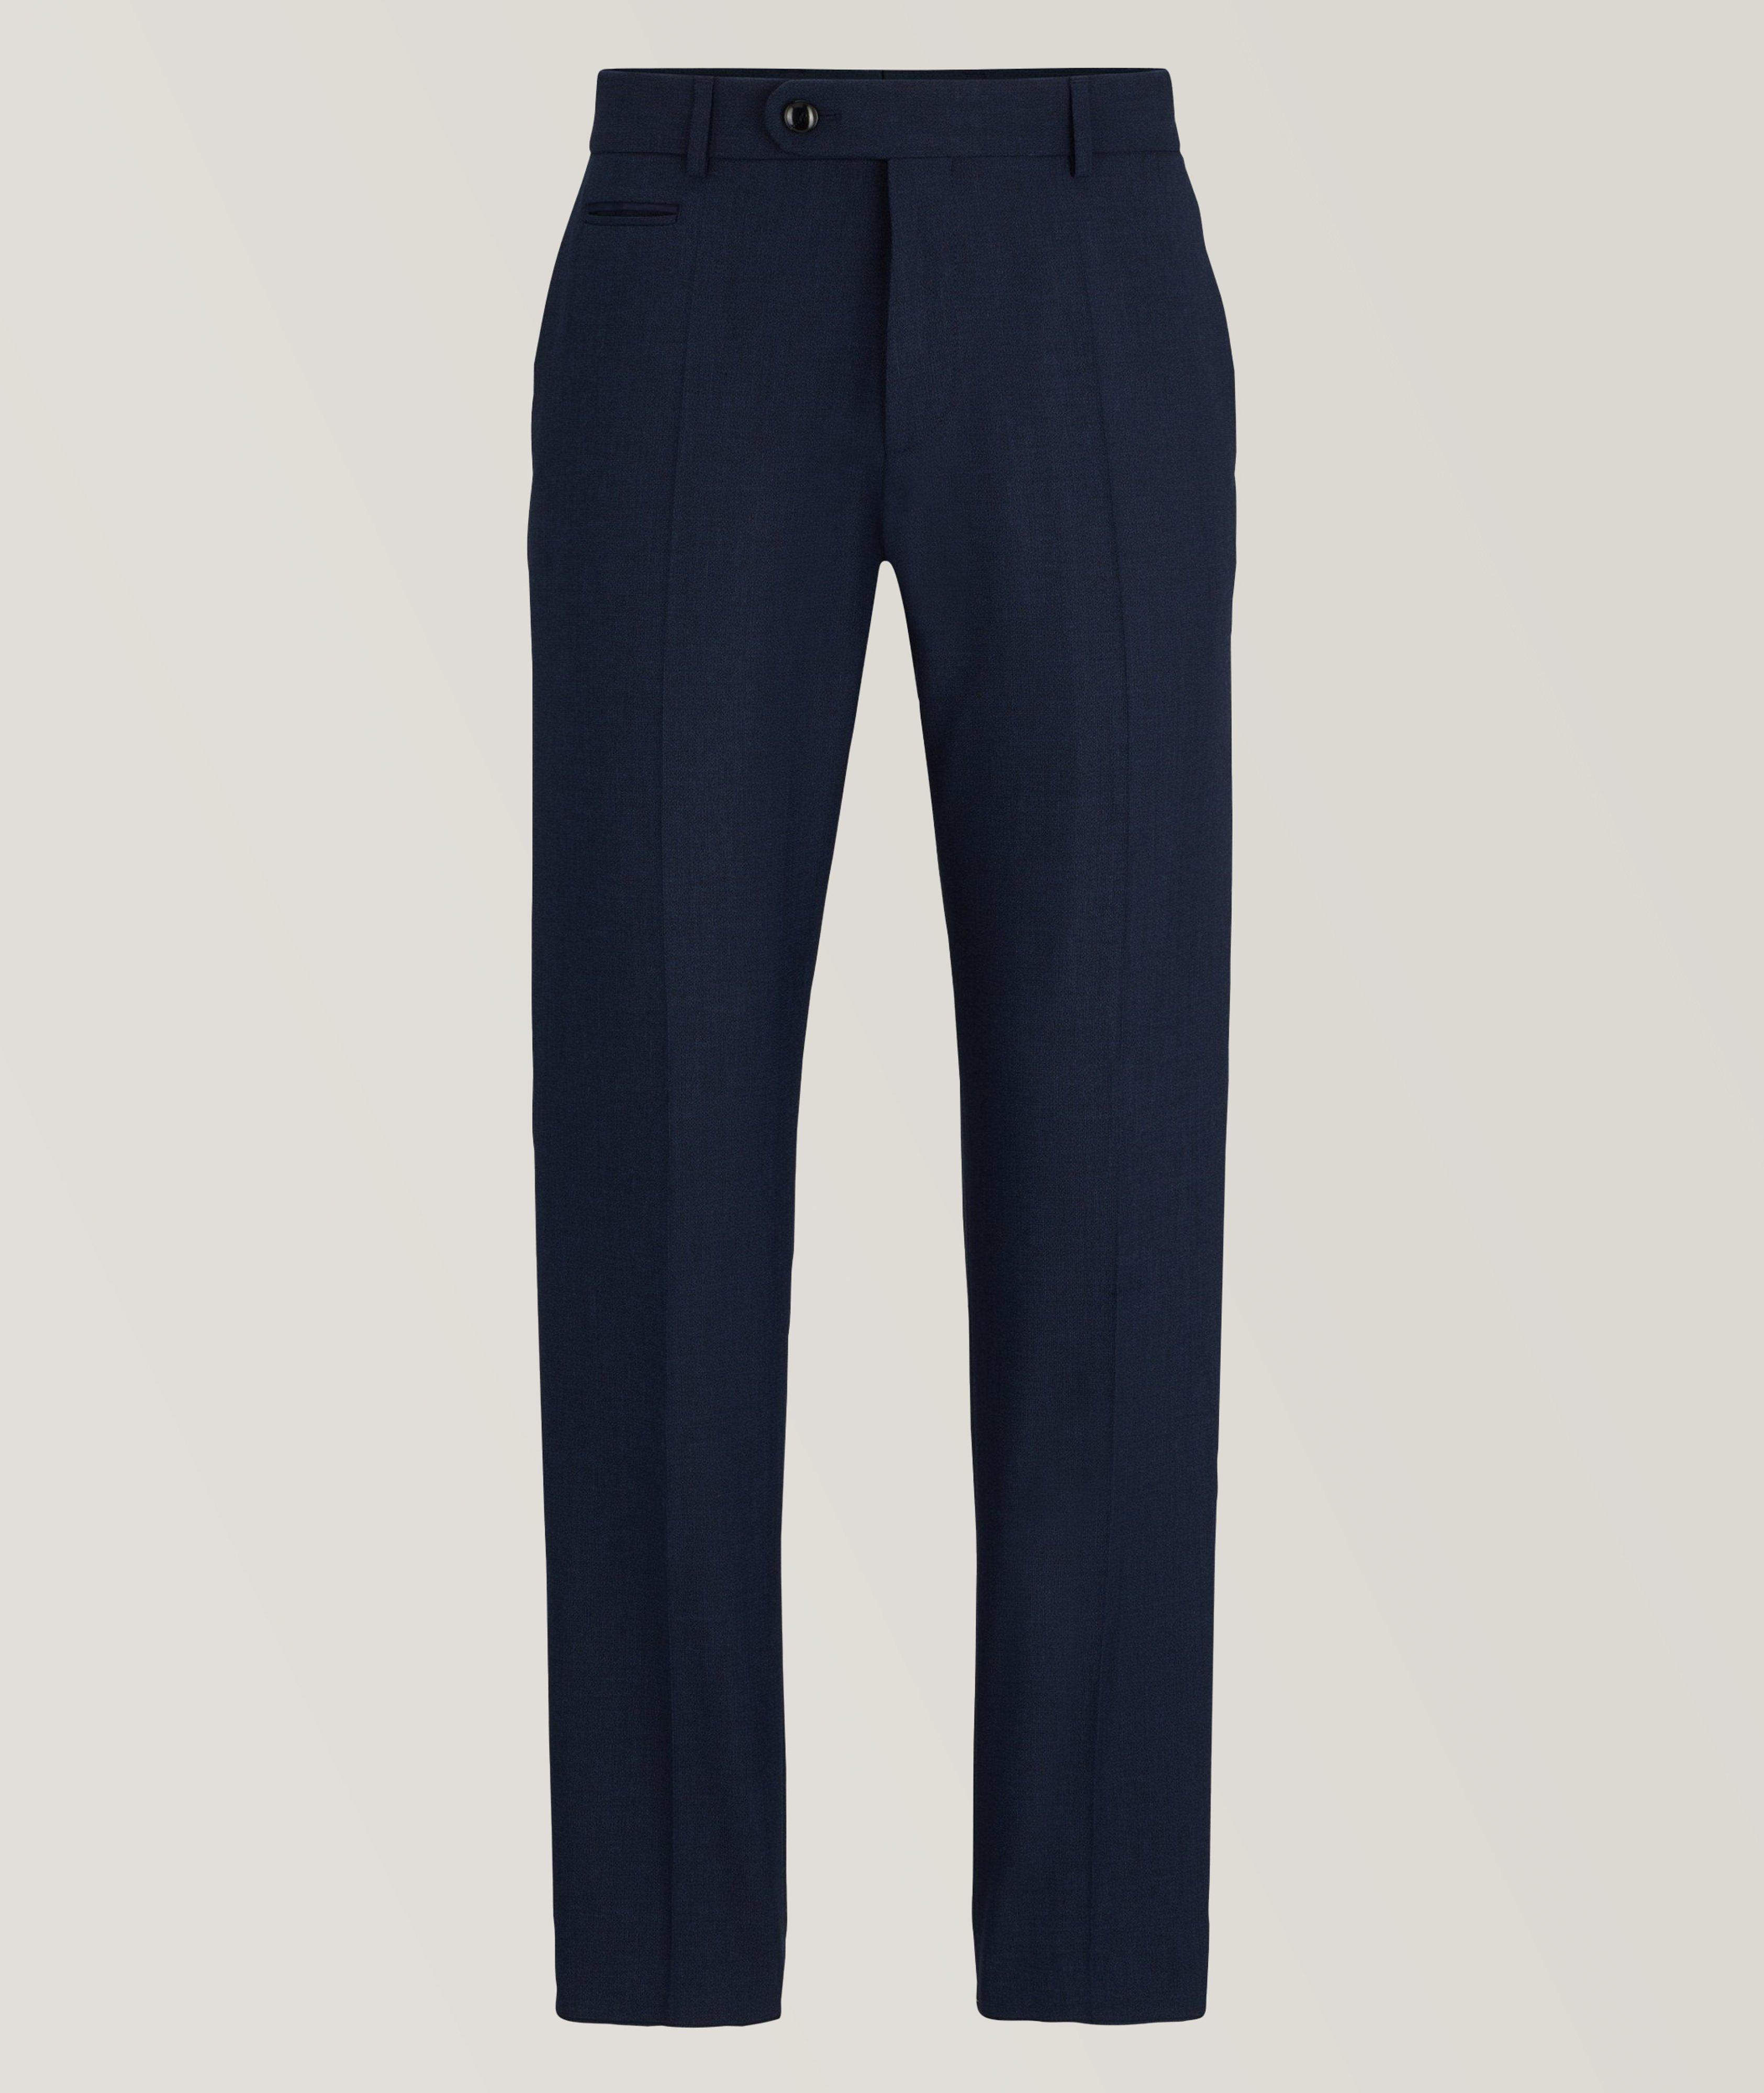 Slim Fit Wrinkle-Resistant Mélange Trousers image 0